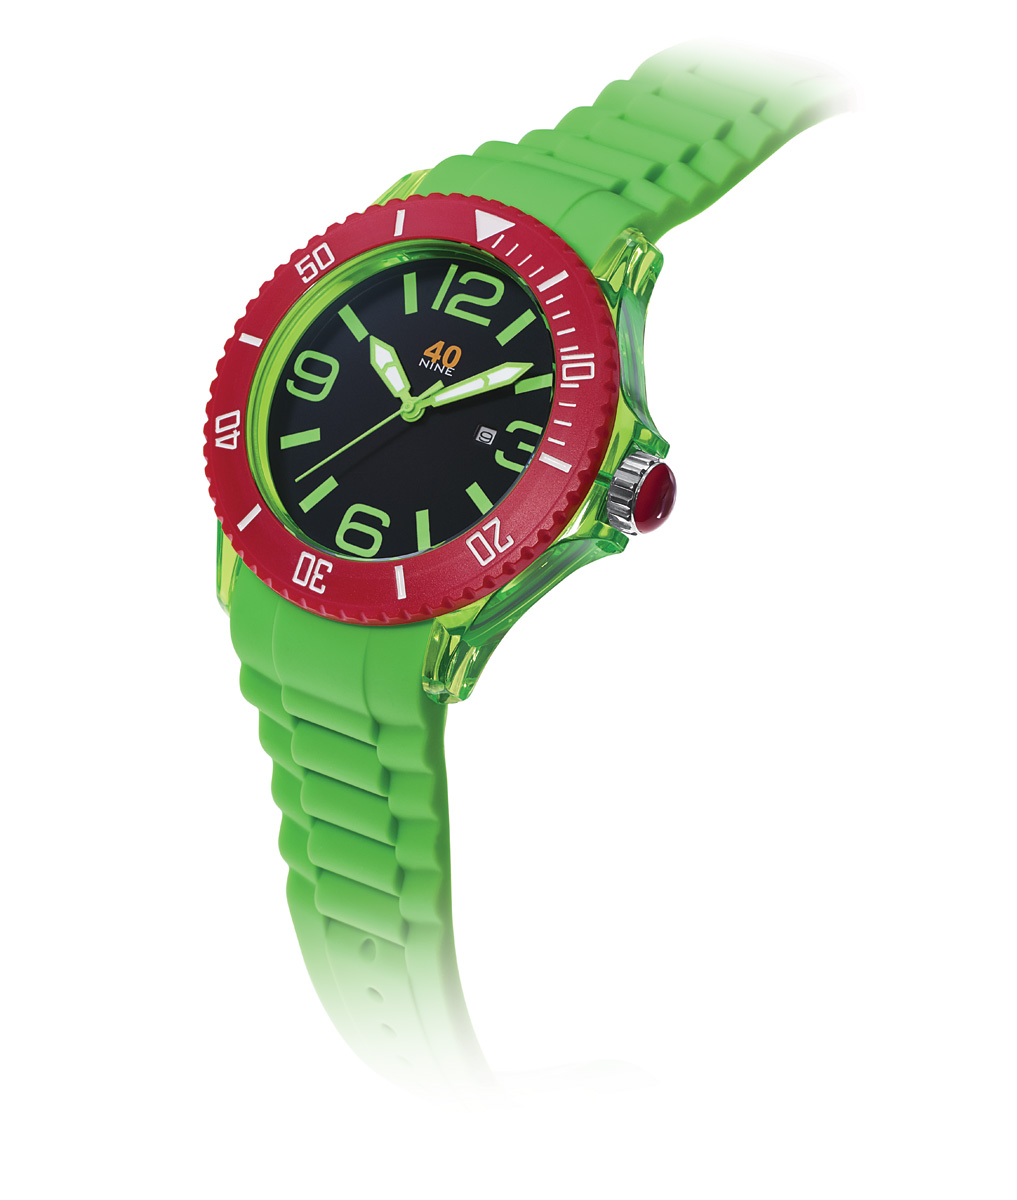 40Nine Green Watch